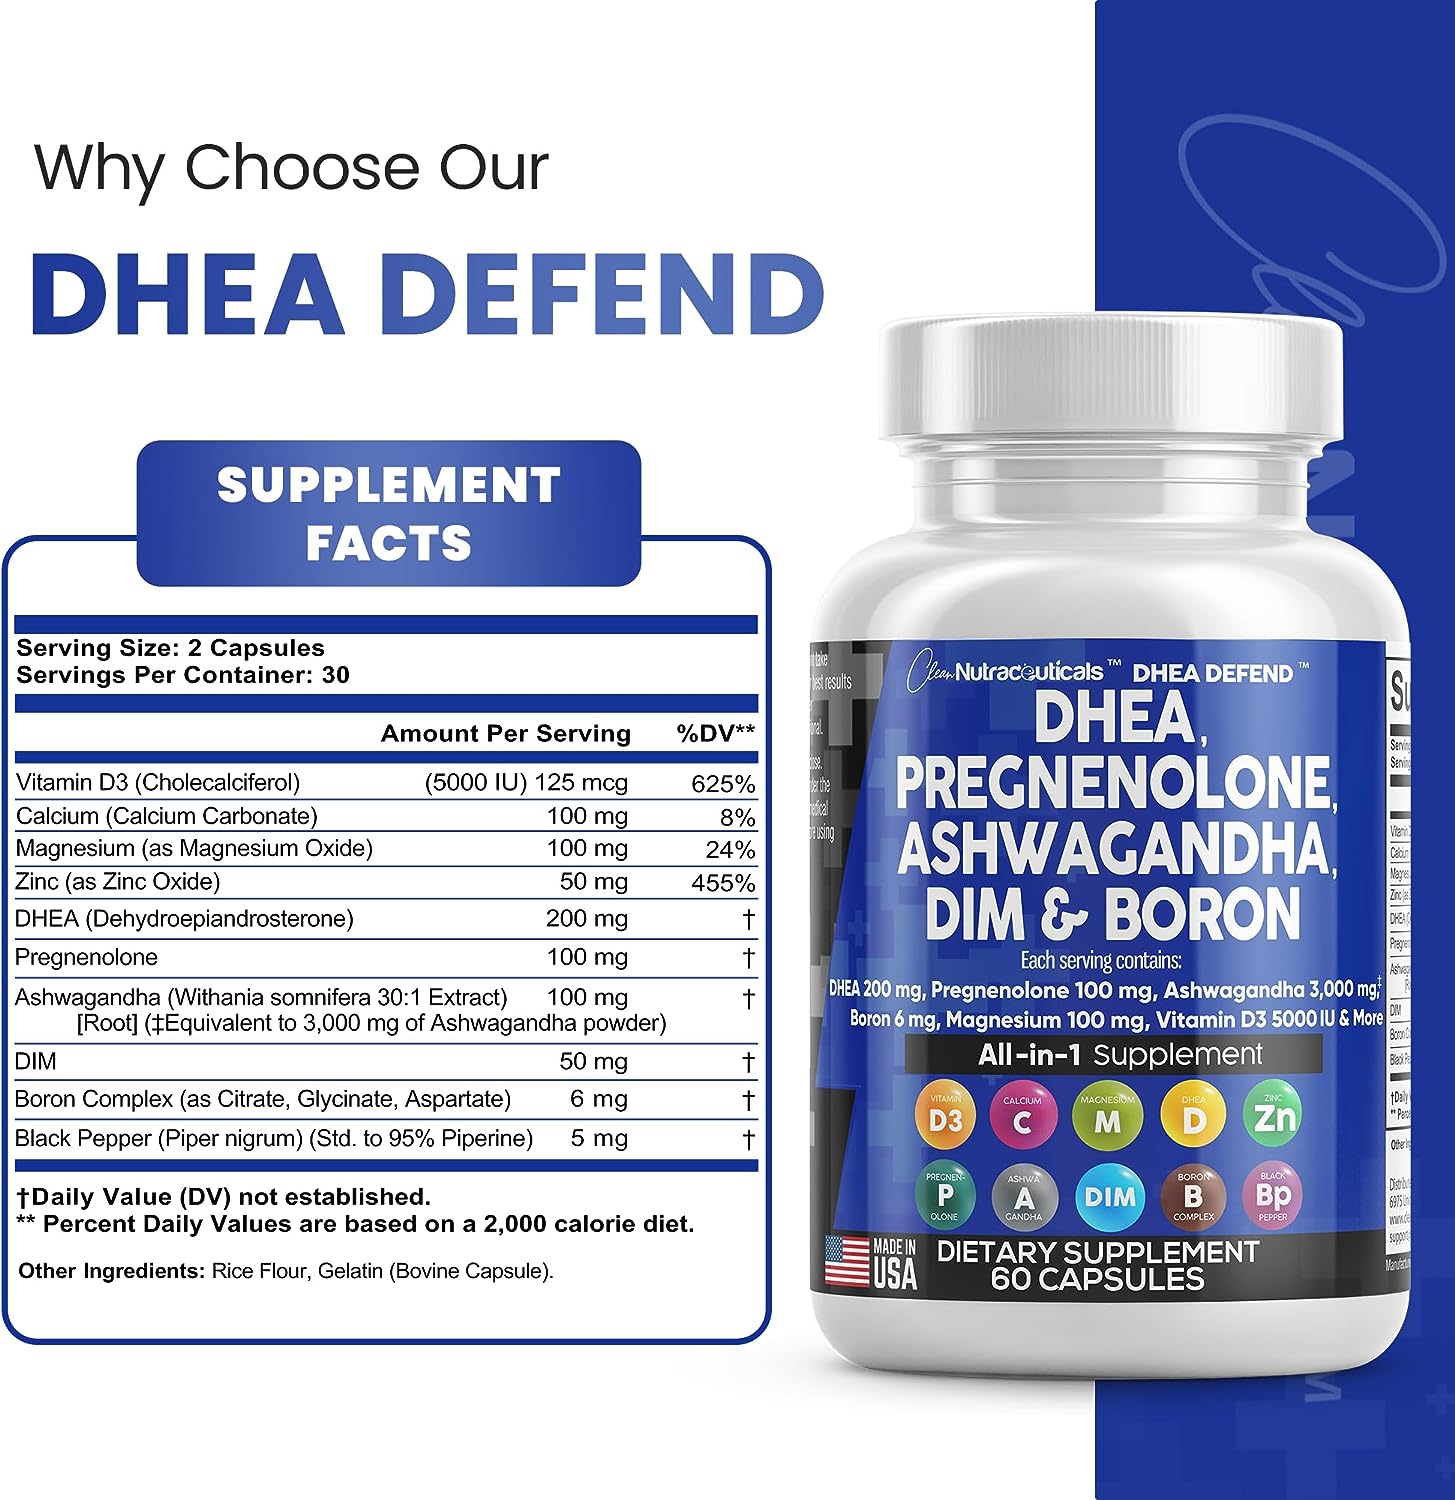 DHEA Defend™